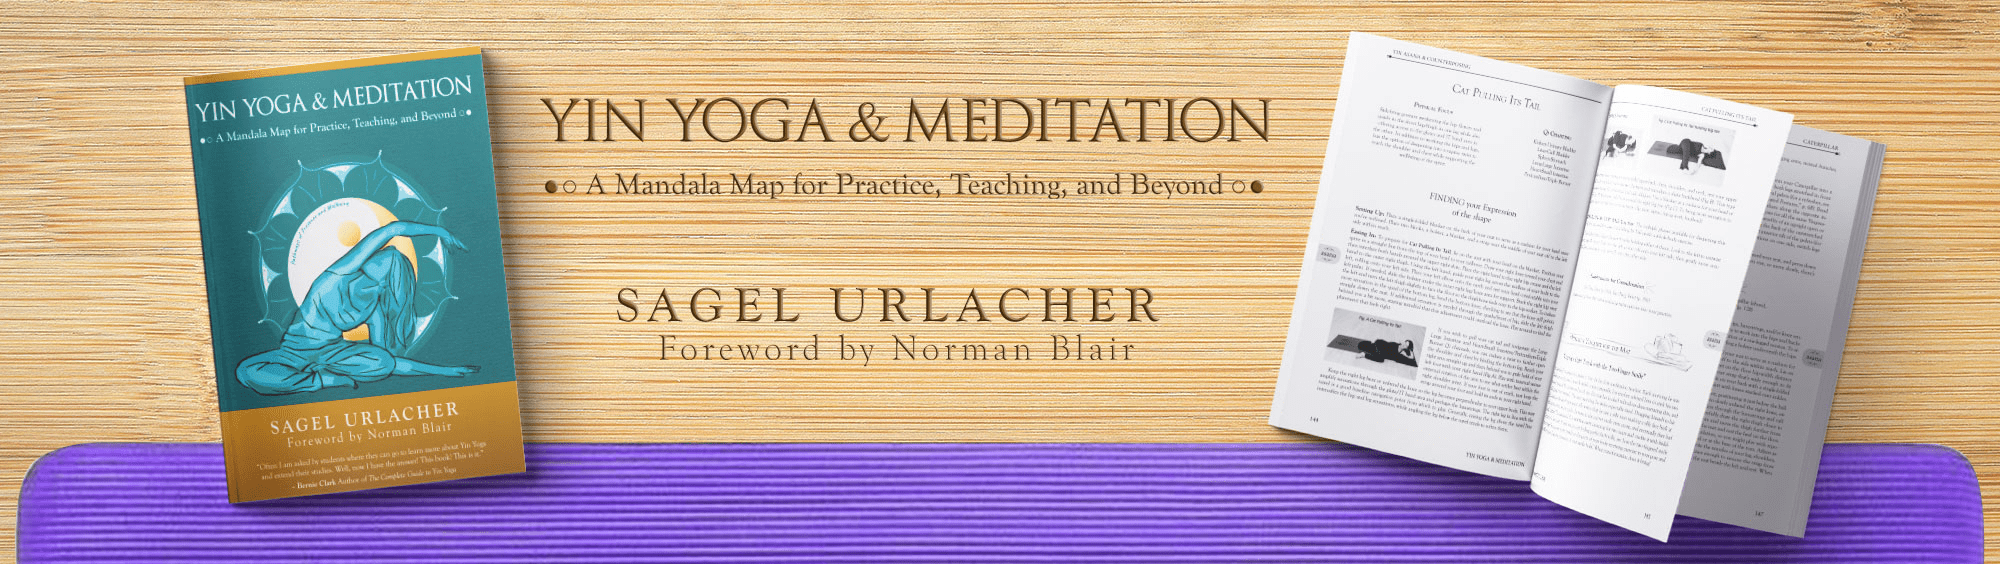 Yin Yoga & Meditation Book by Sagel Urlacher